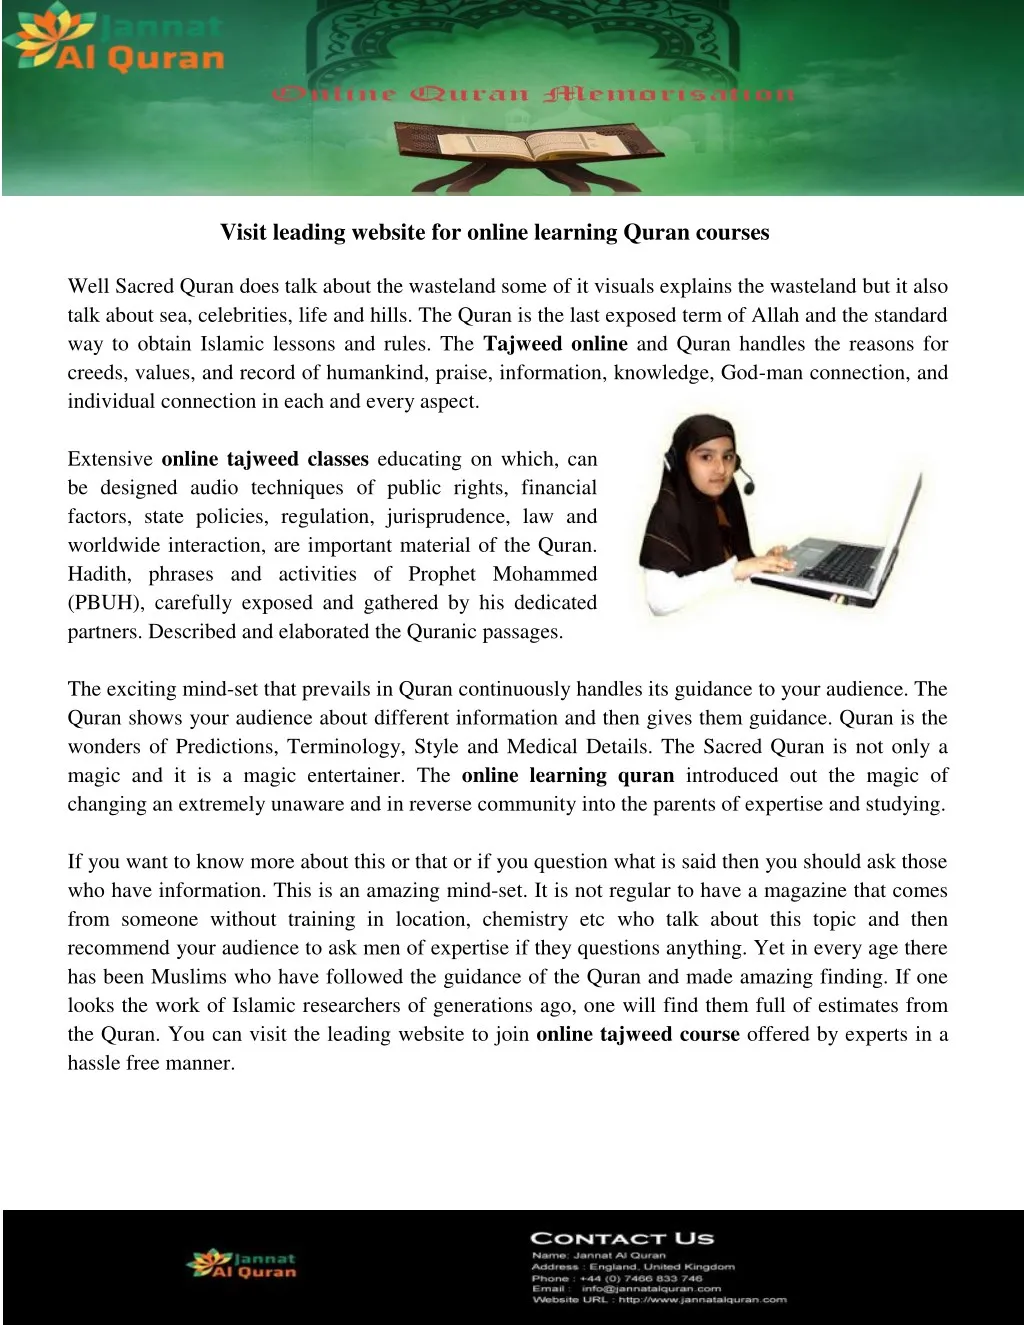 visit leading website for online learning quran